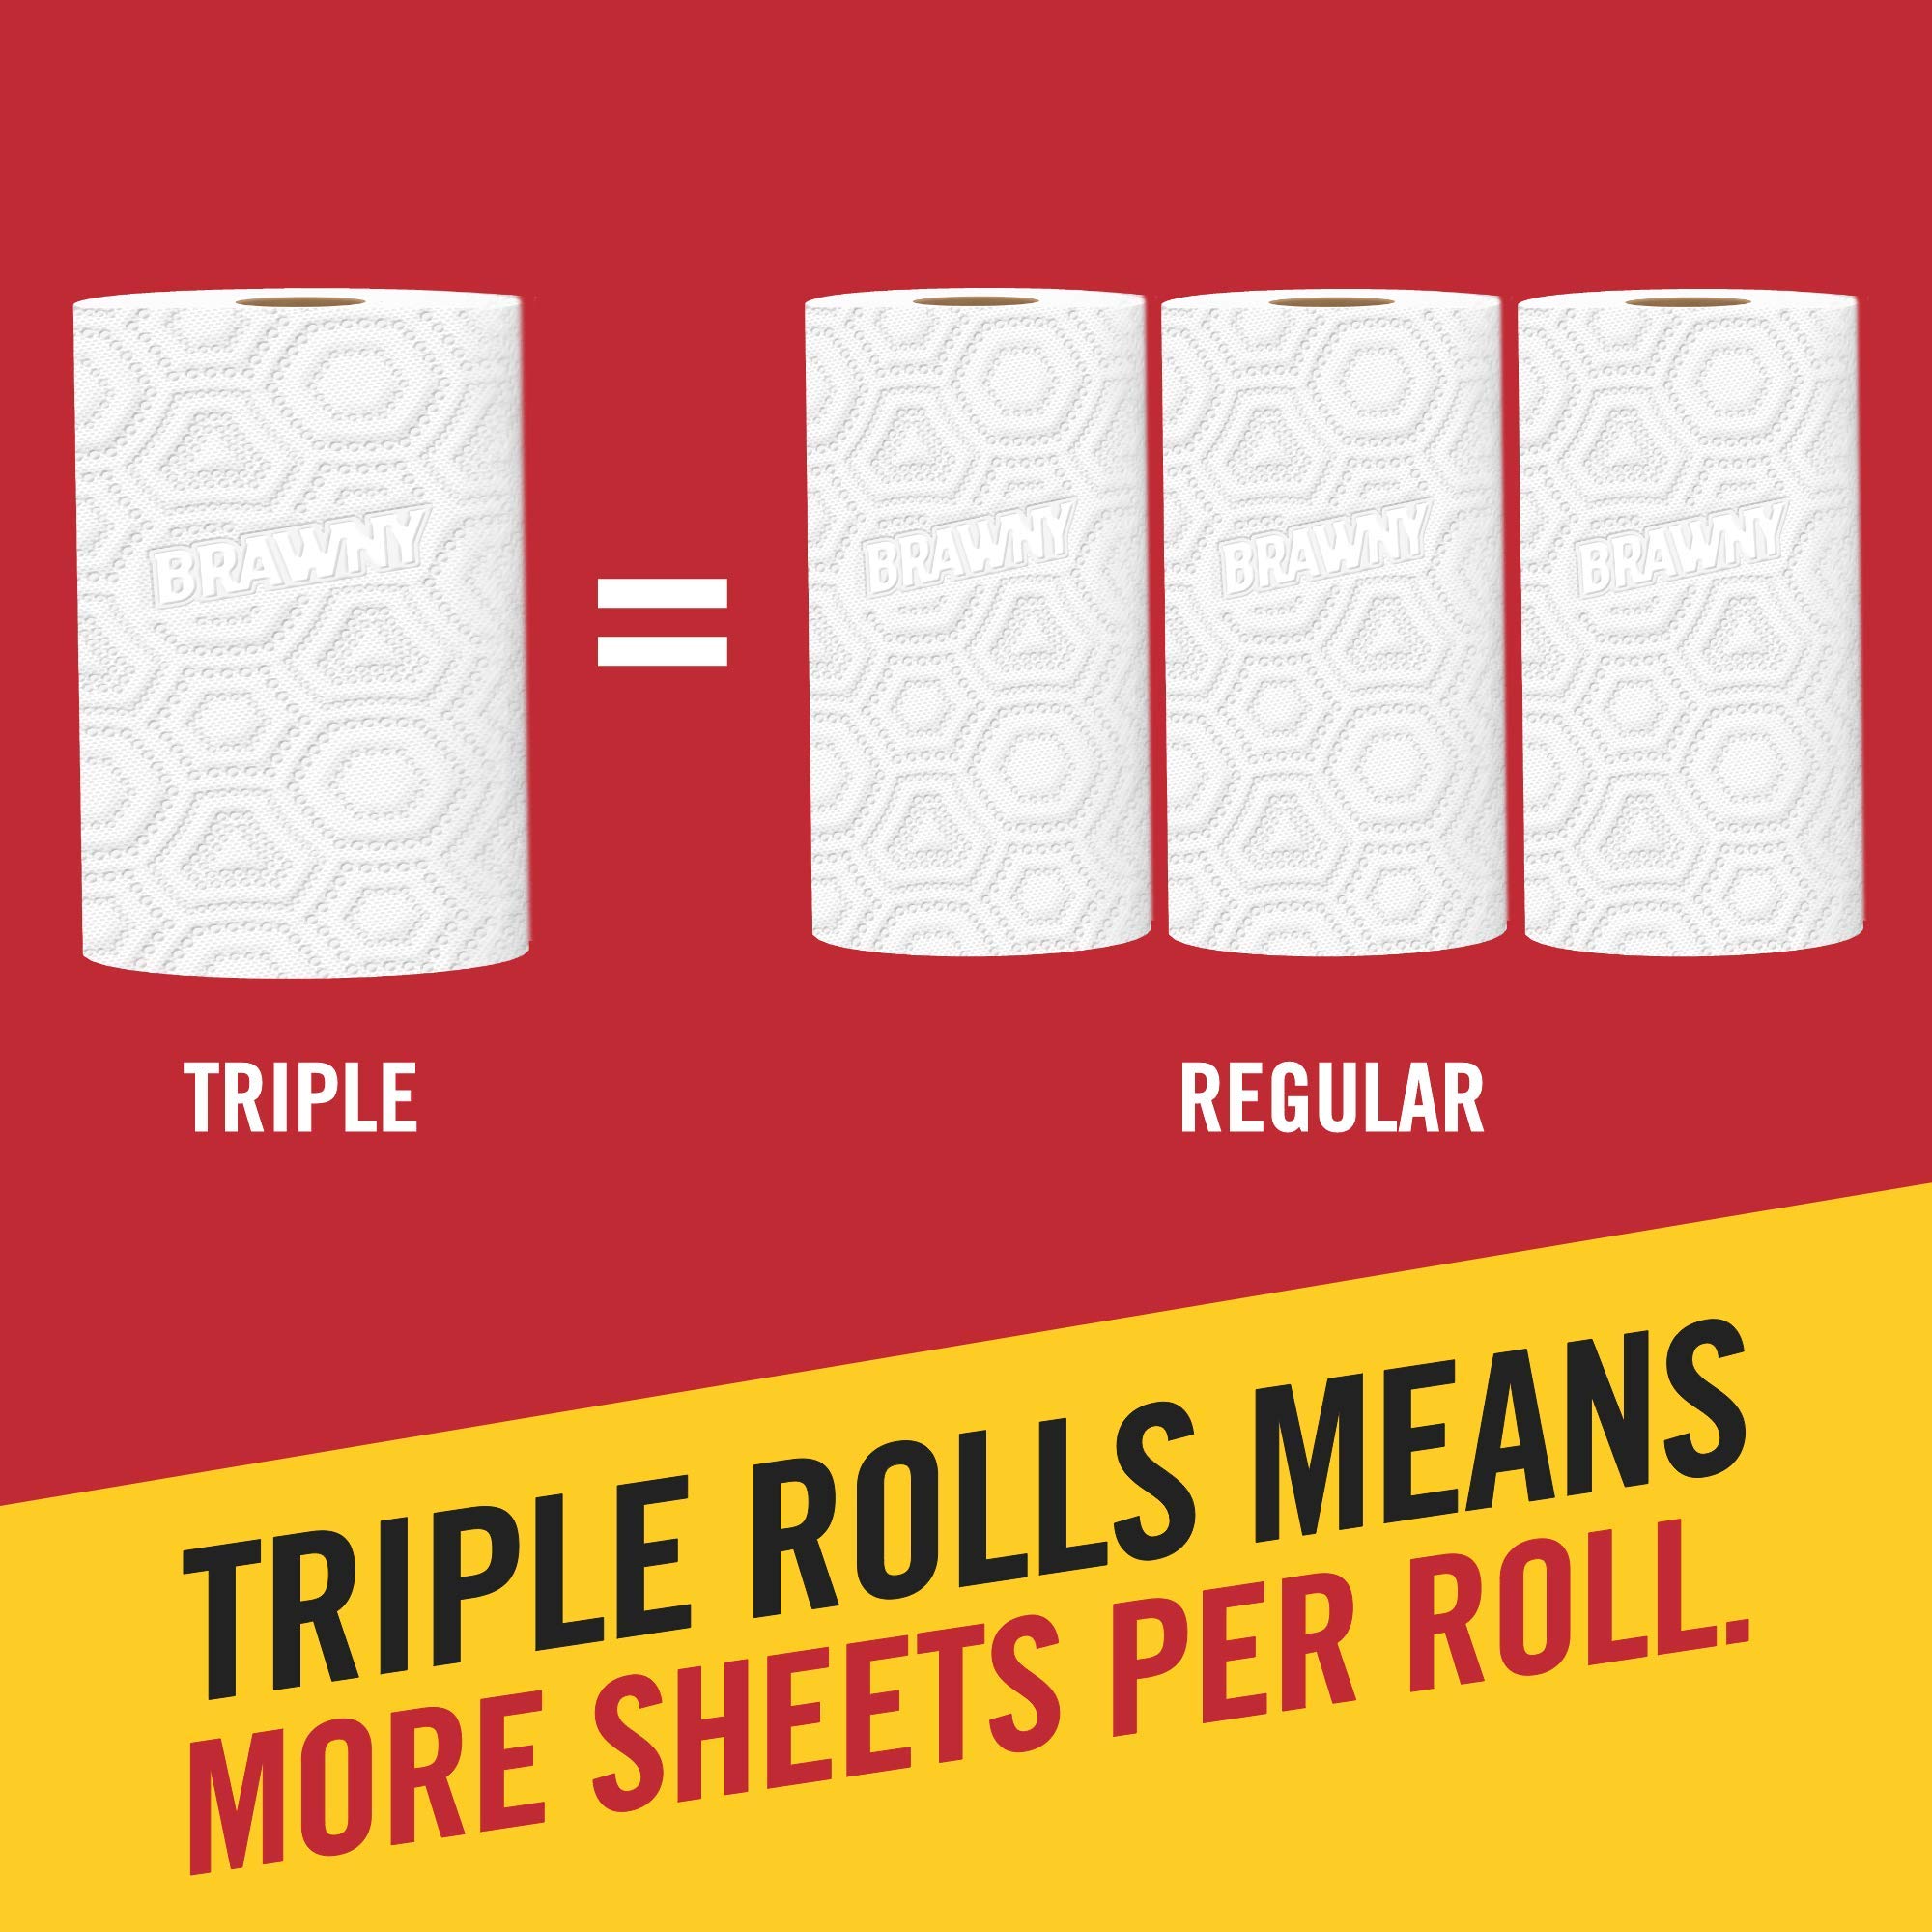 Brawny Flex Paper Towels, 8 Triple Rolls = 24 Regular Rolls, Tear-A-Square, 3 Sheet Size Options, Quarter Size Sheets